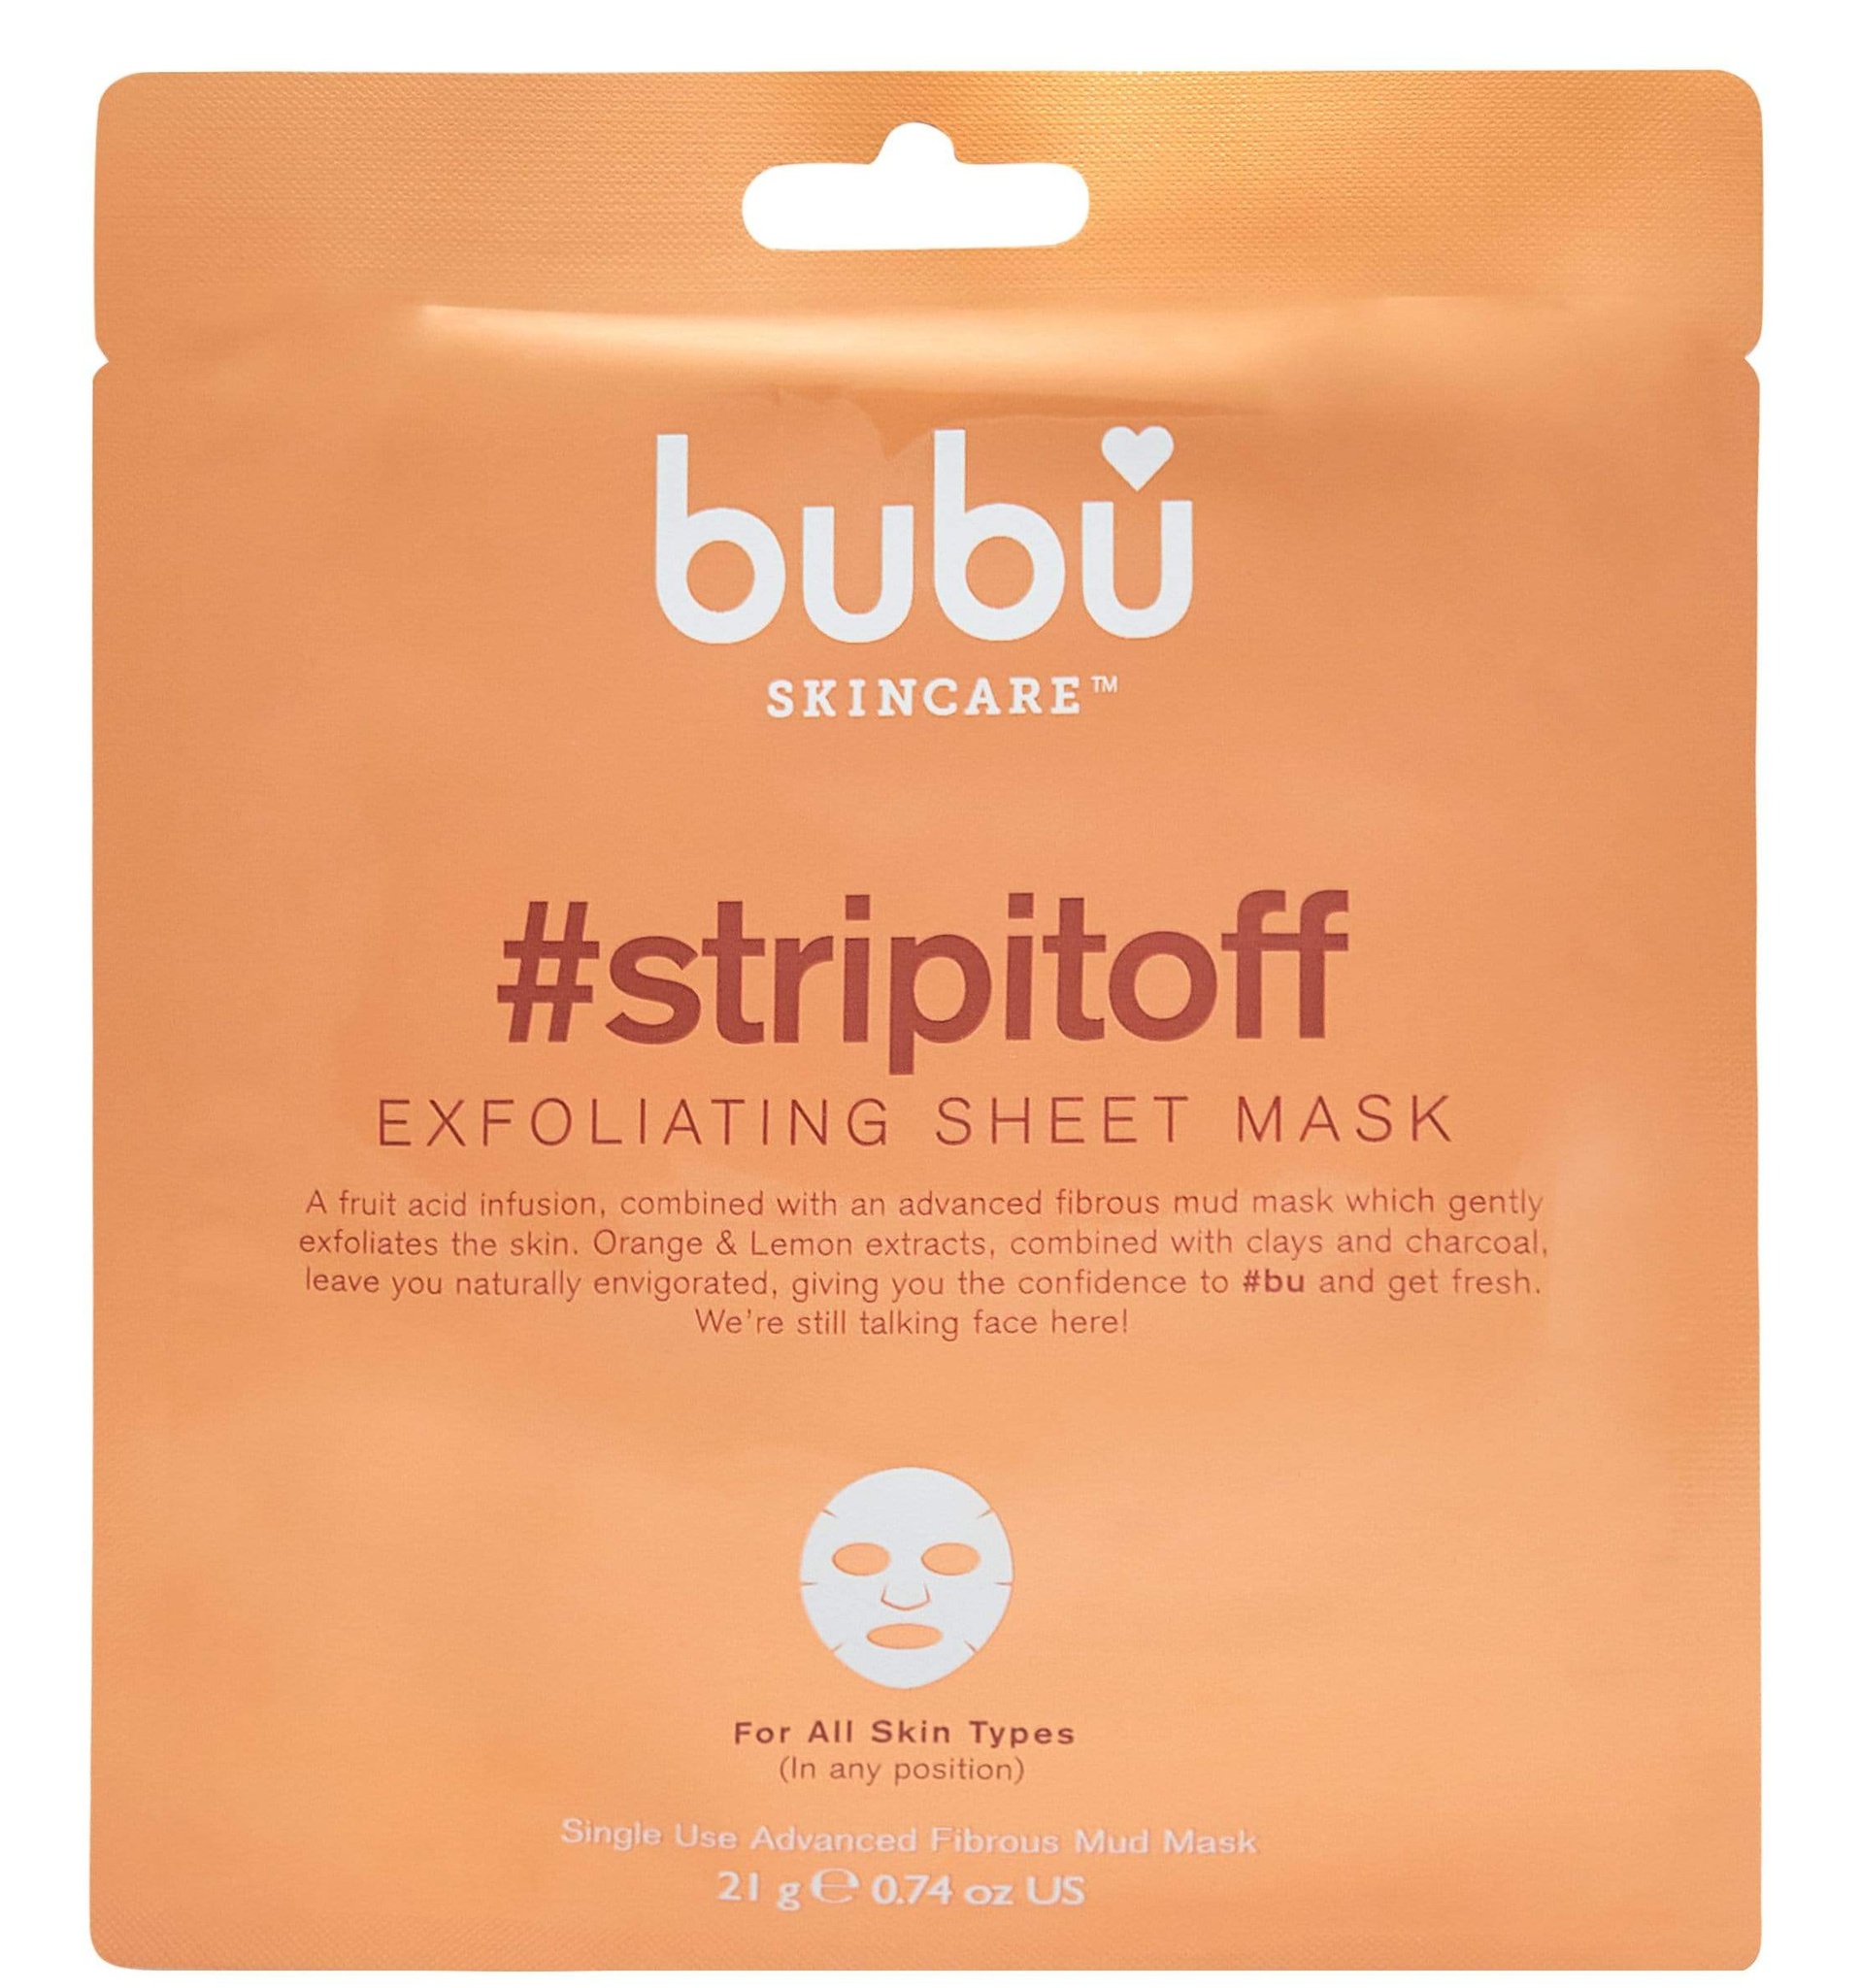 Bubu skincare #stripitoff Exfoliating Mask